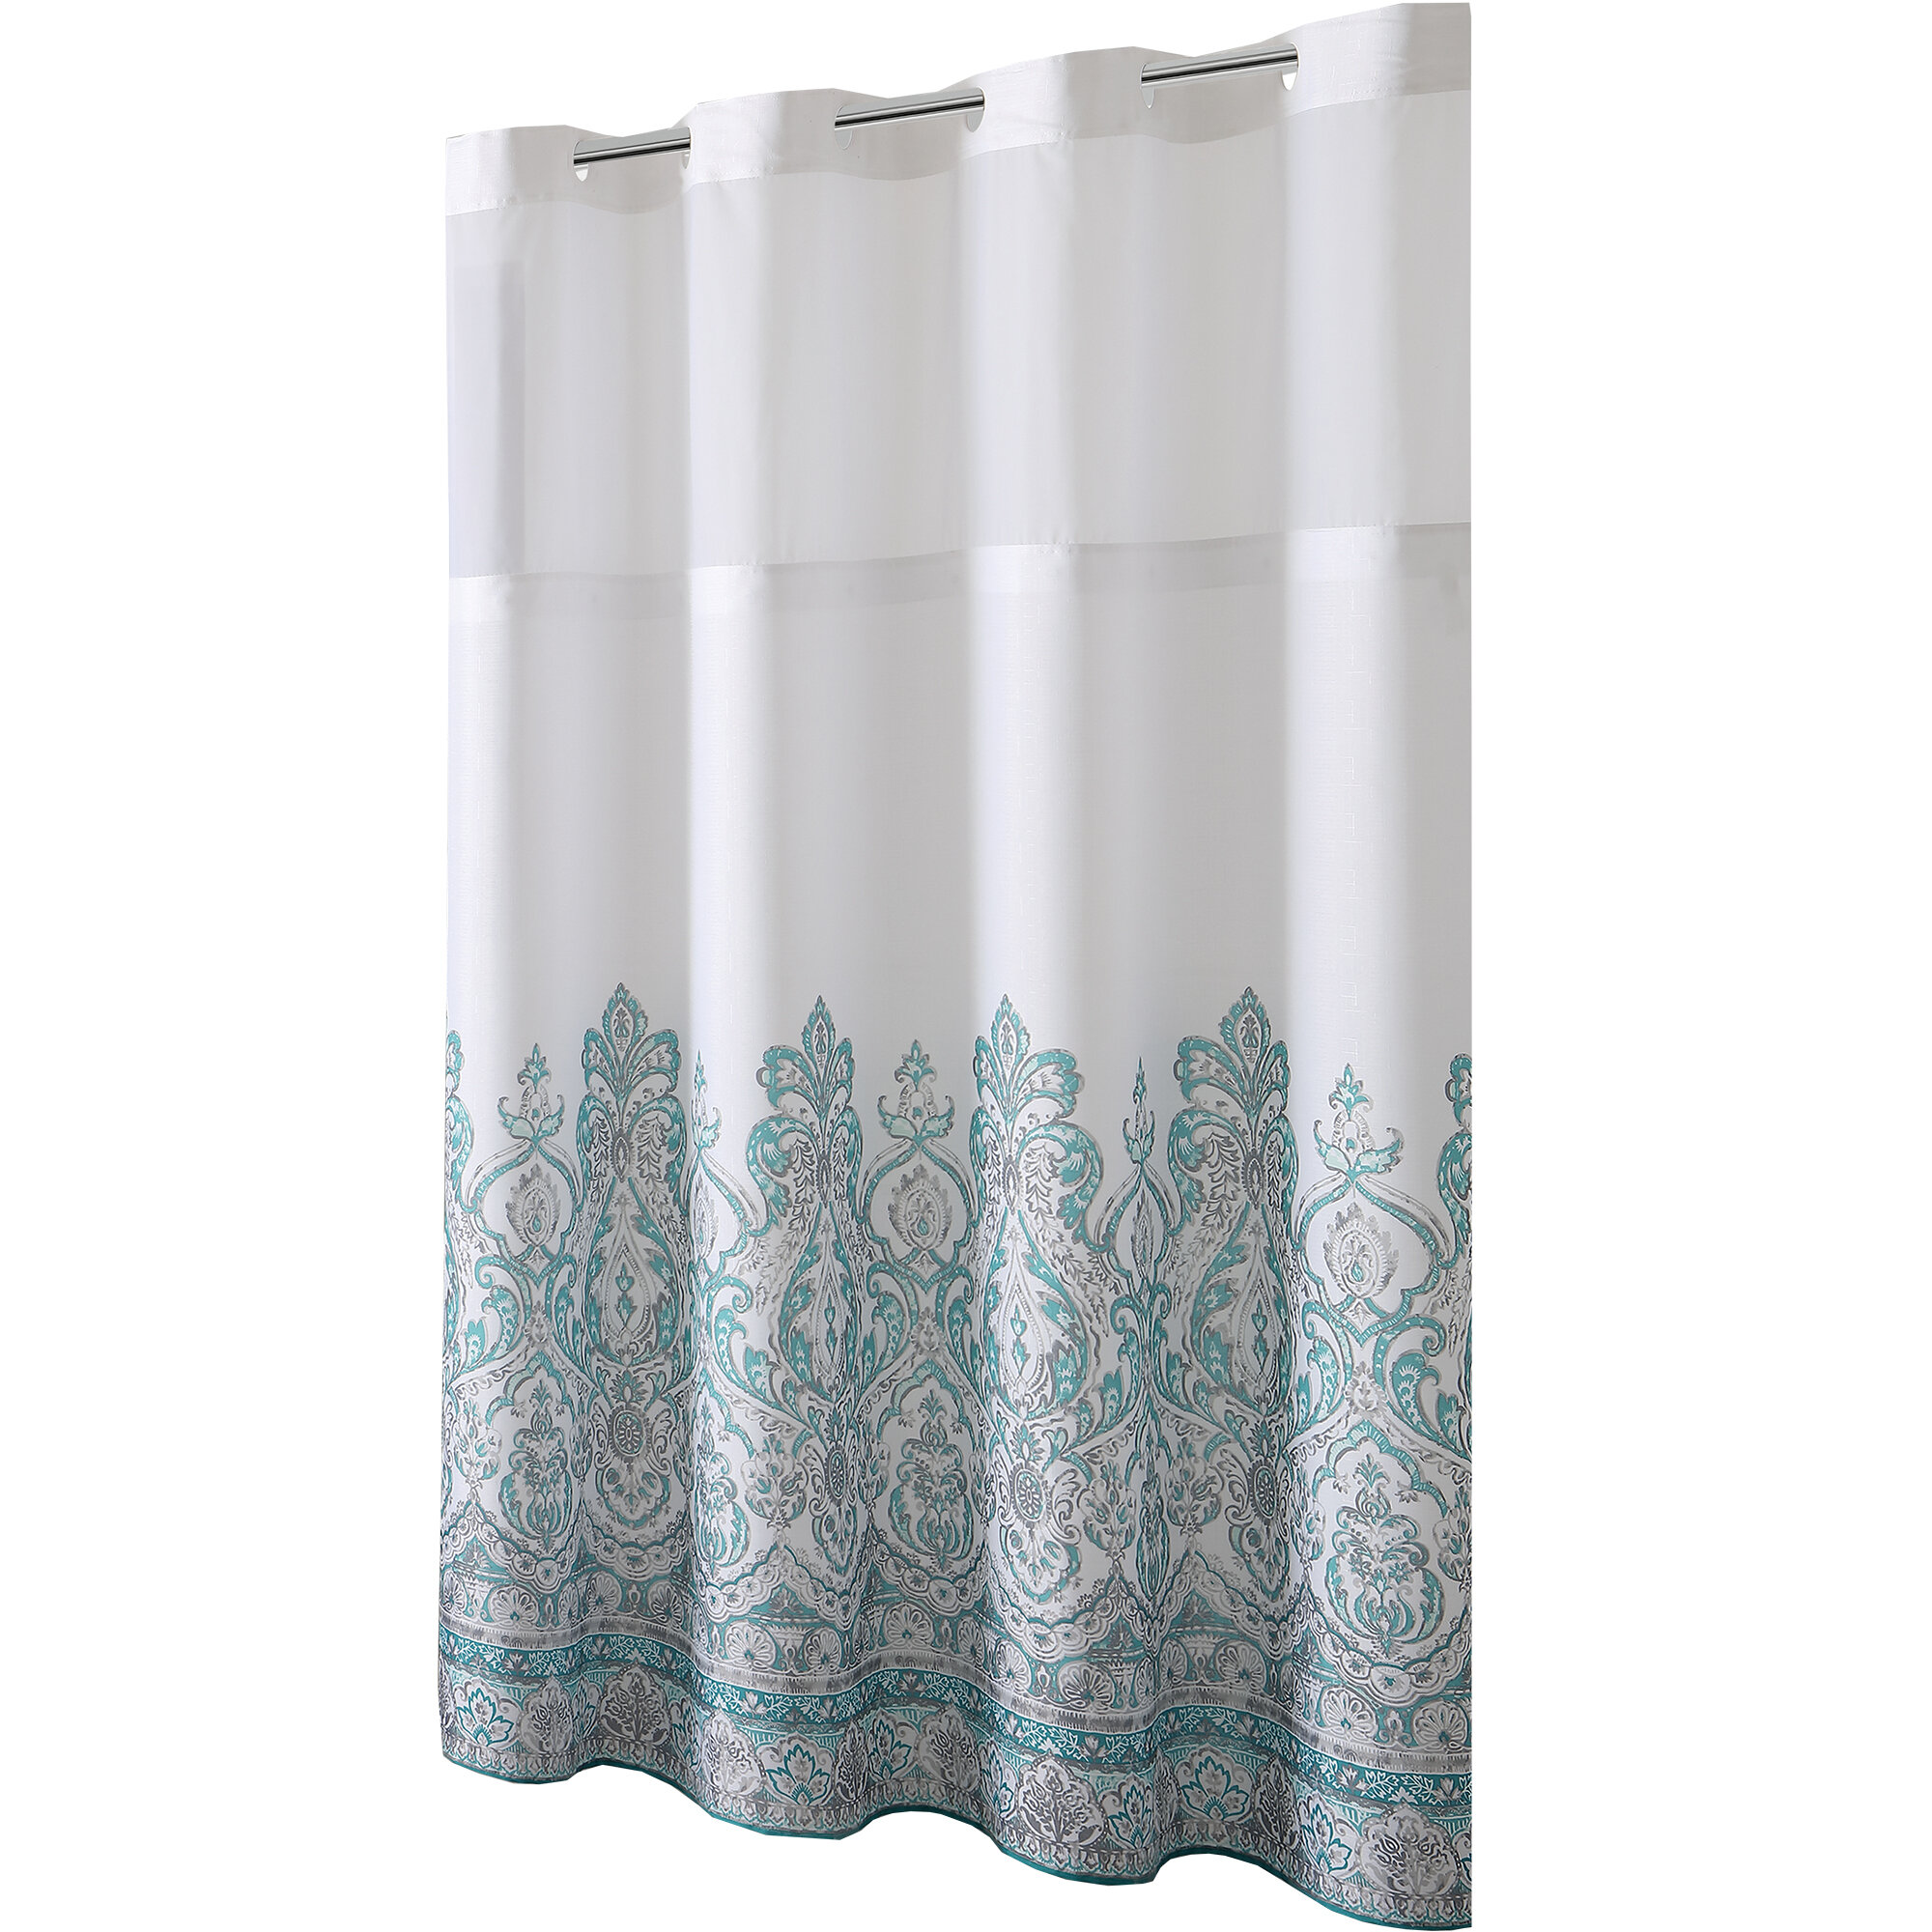 Make Happy Camper Waterproof Fabric Shower Curtain Bathroom Drapes Panel w//Hooks